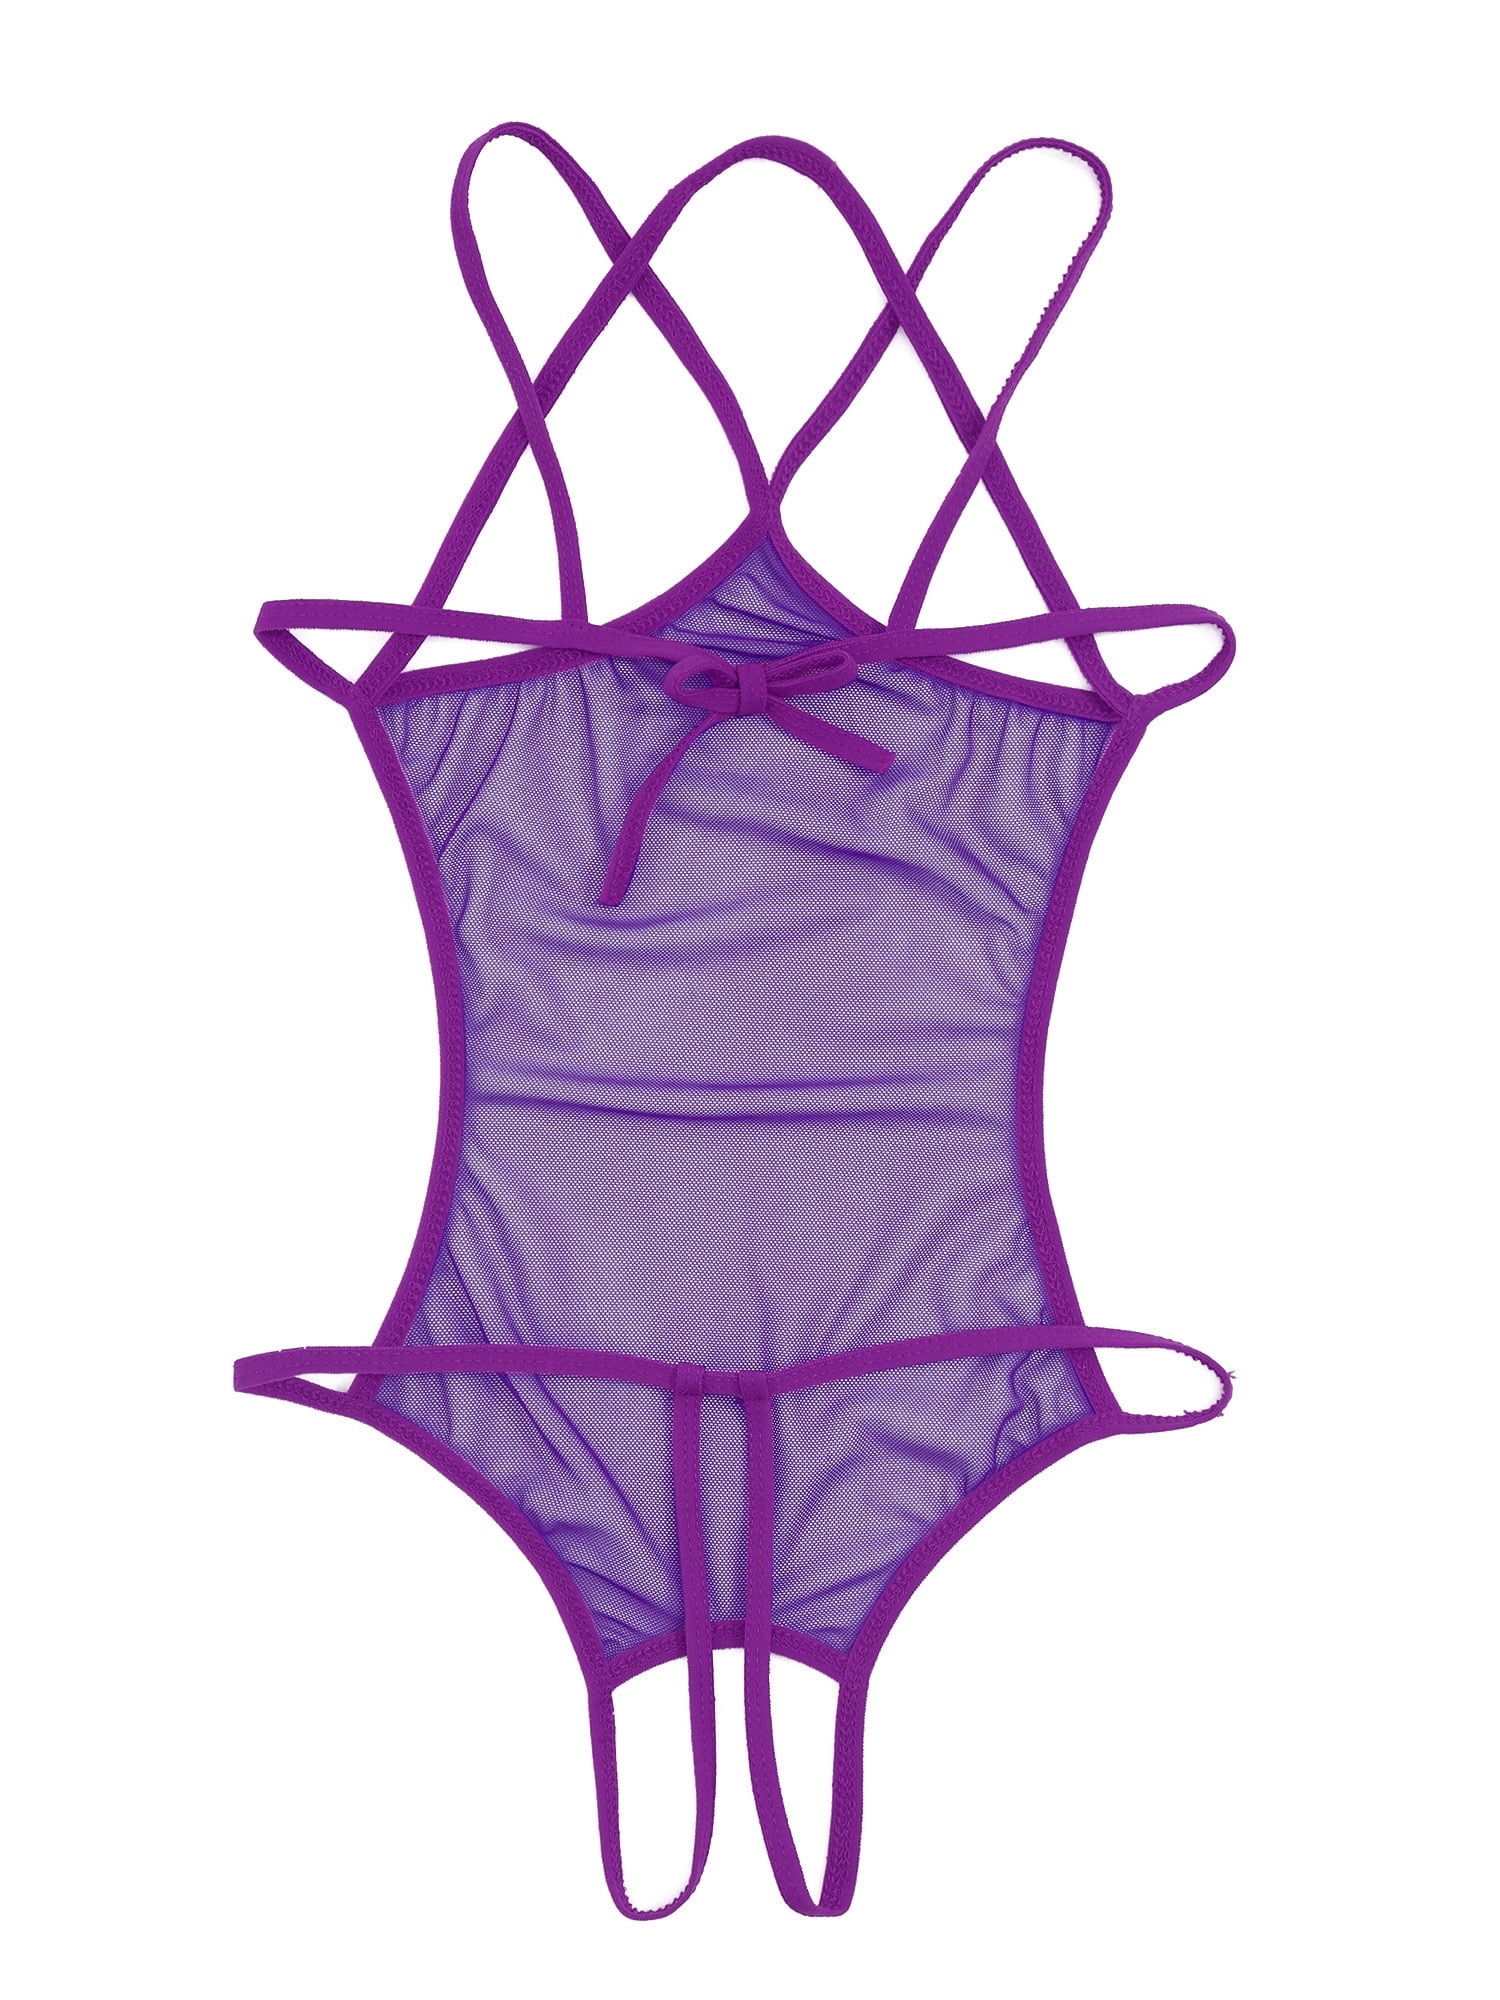 Transparent Mesh Bodysuit: Sexy Lingerie For Women Open Crotch, Erotic  Sleepwear & Teddies From Shacksla, $9.19